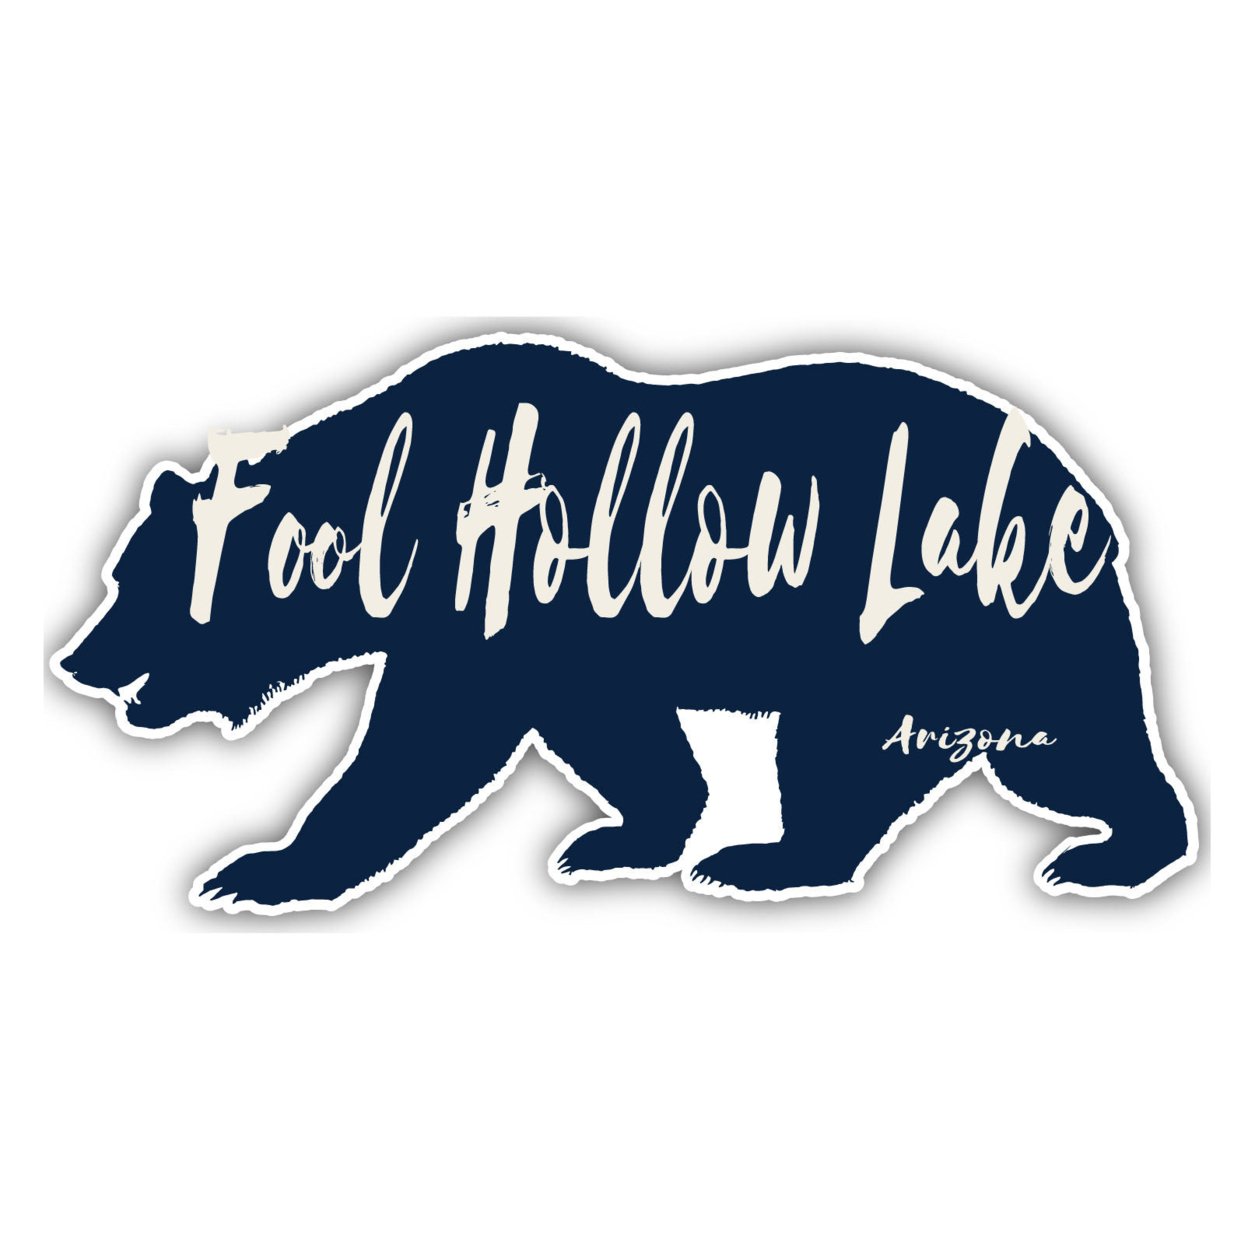 Fool Hollow Lake Arizona Souvenir Decorative Stickers (Choose Theme And Size) - Single Unit, 8-Inch, Camp Life